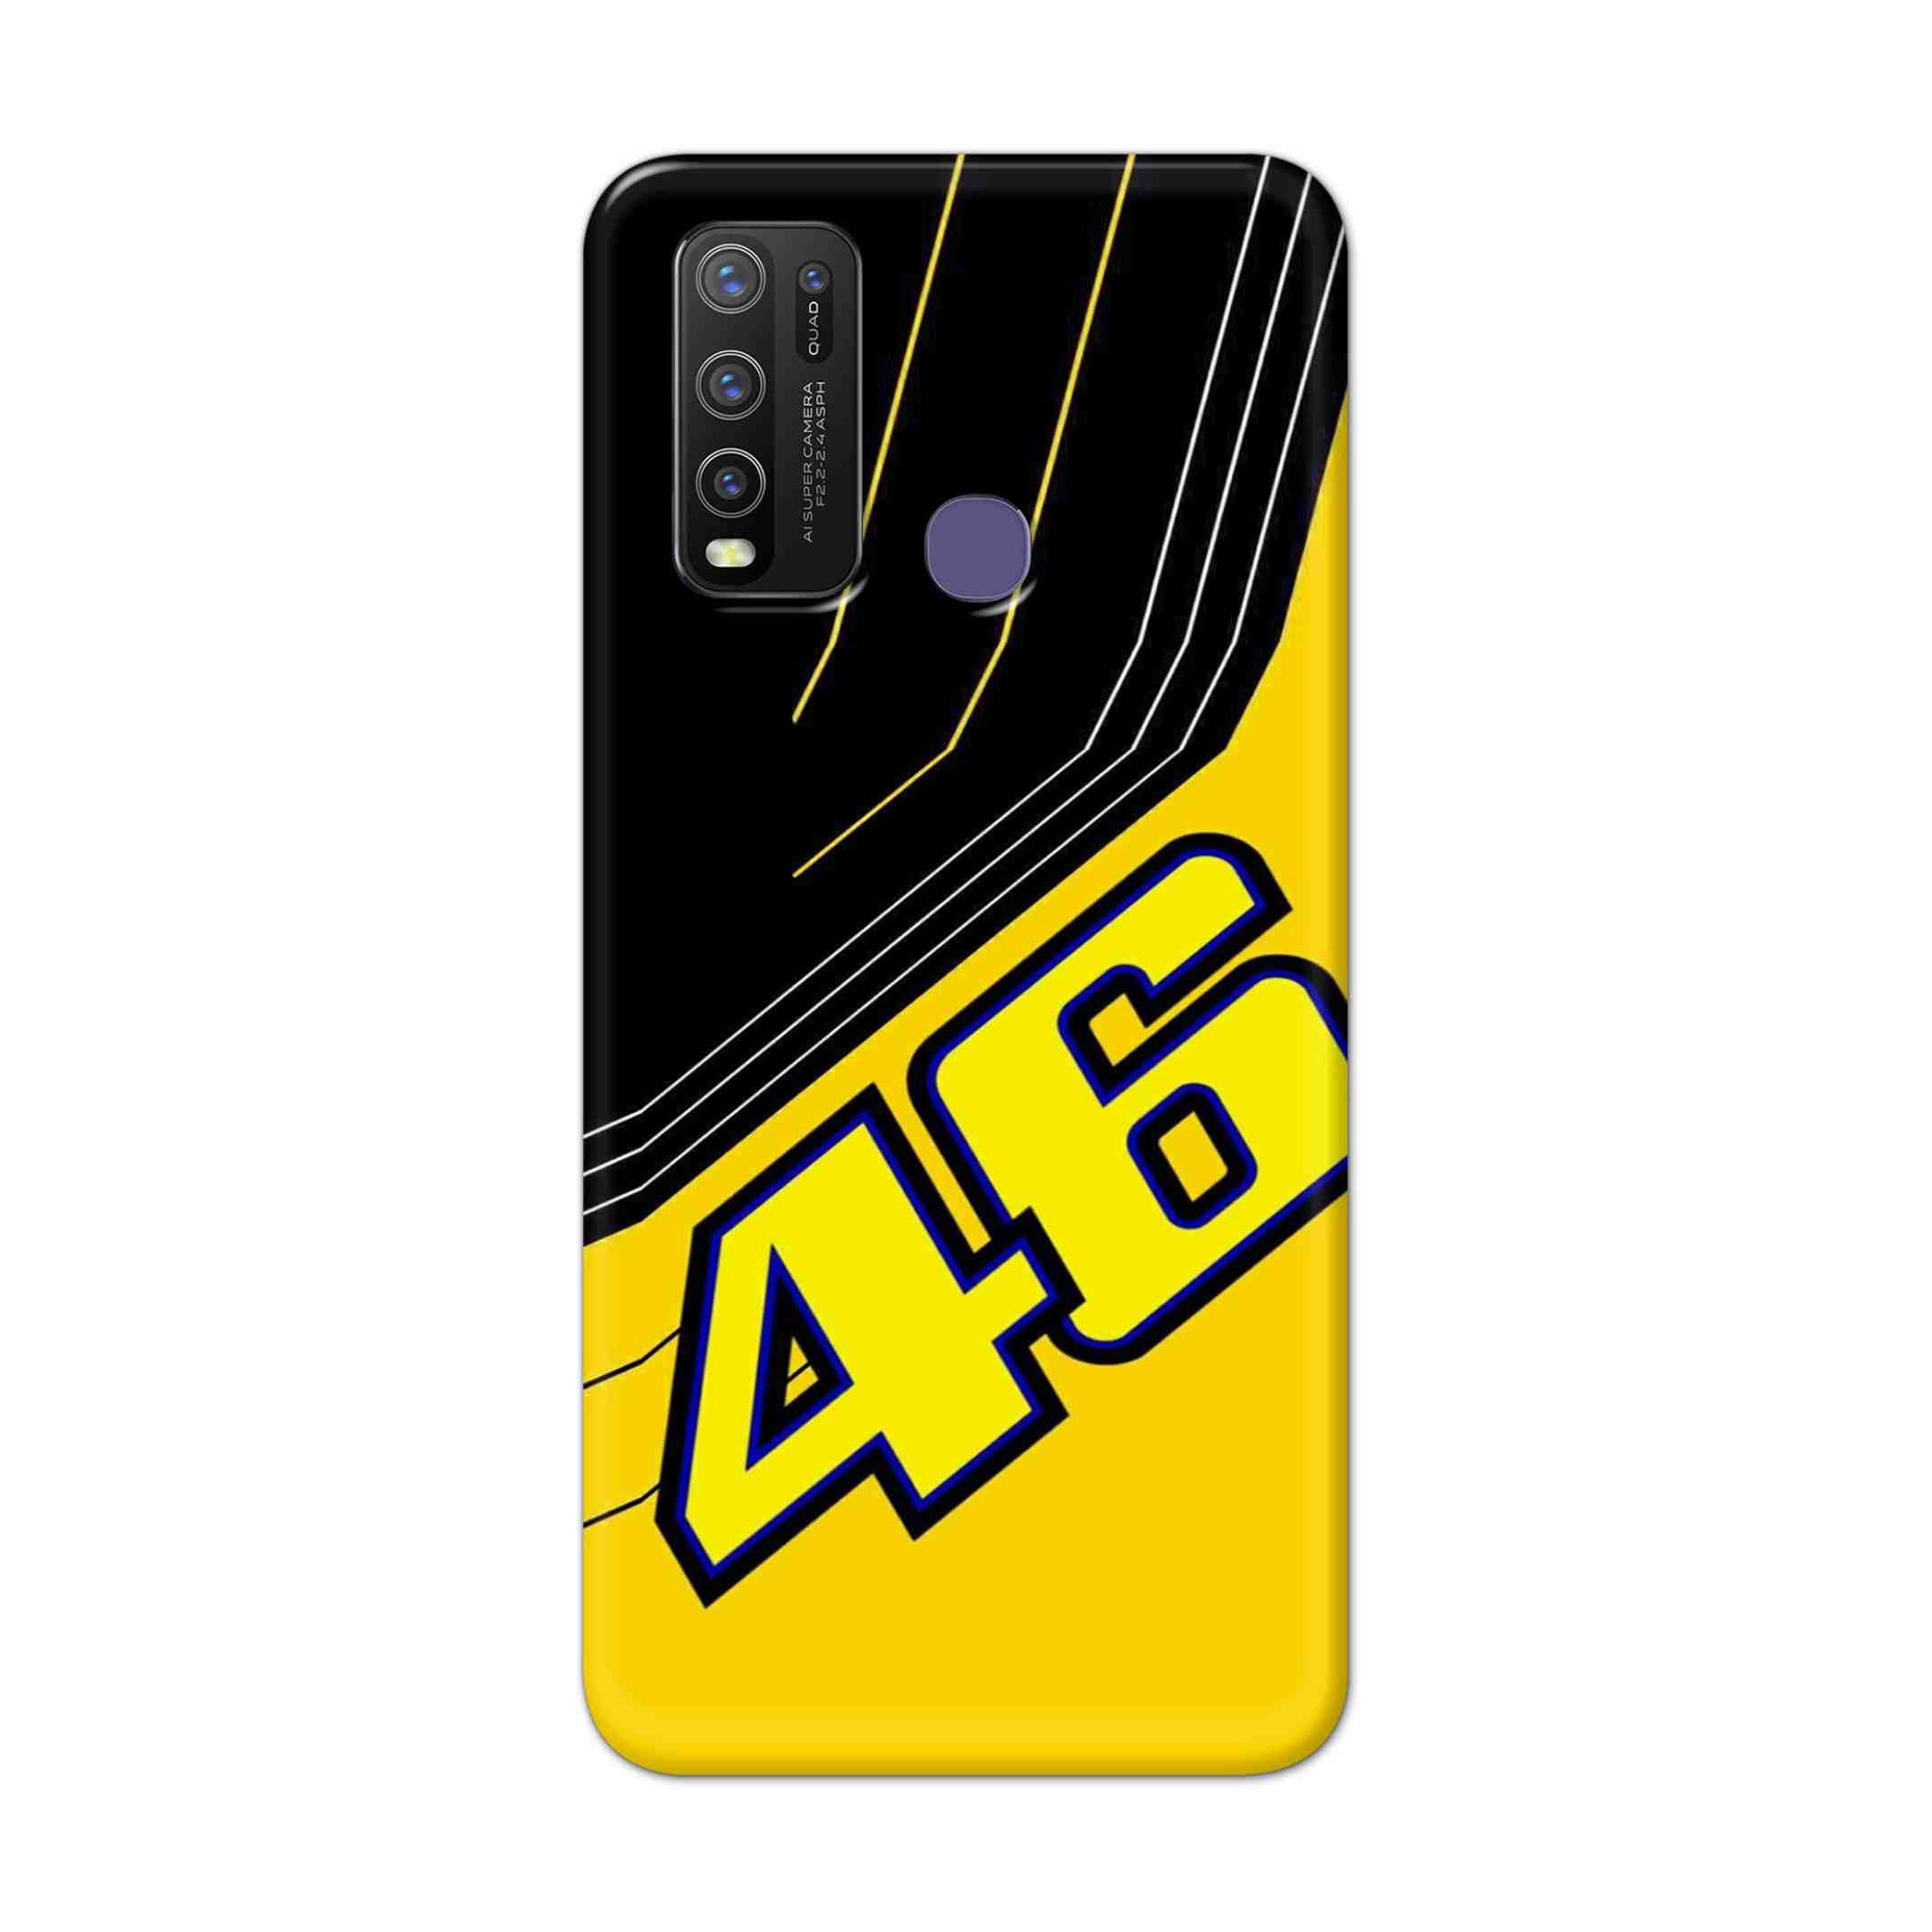 Buy 46 Hard Back Mobile Phone Case Cover For Vivo Y50 Online